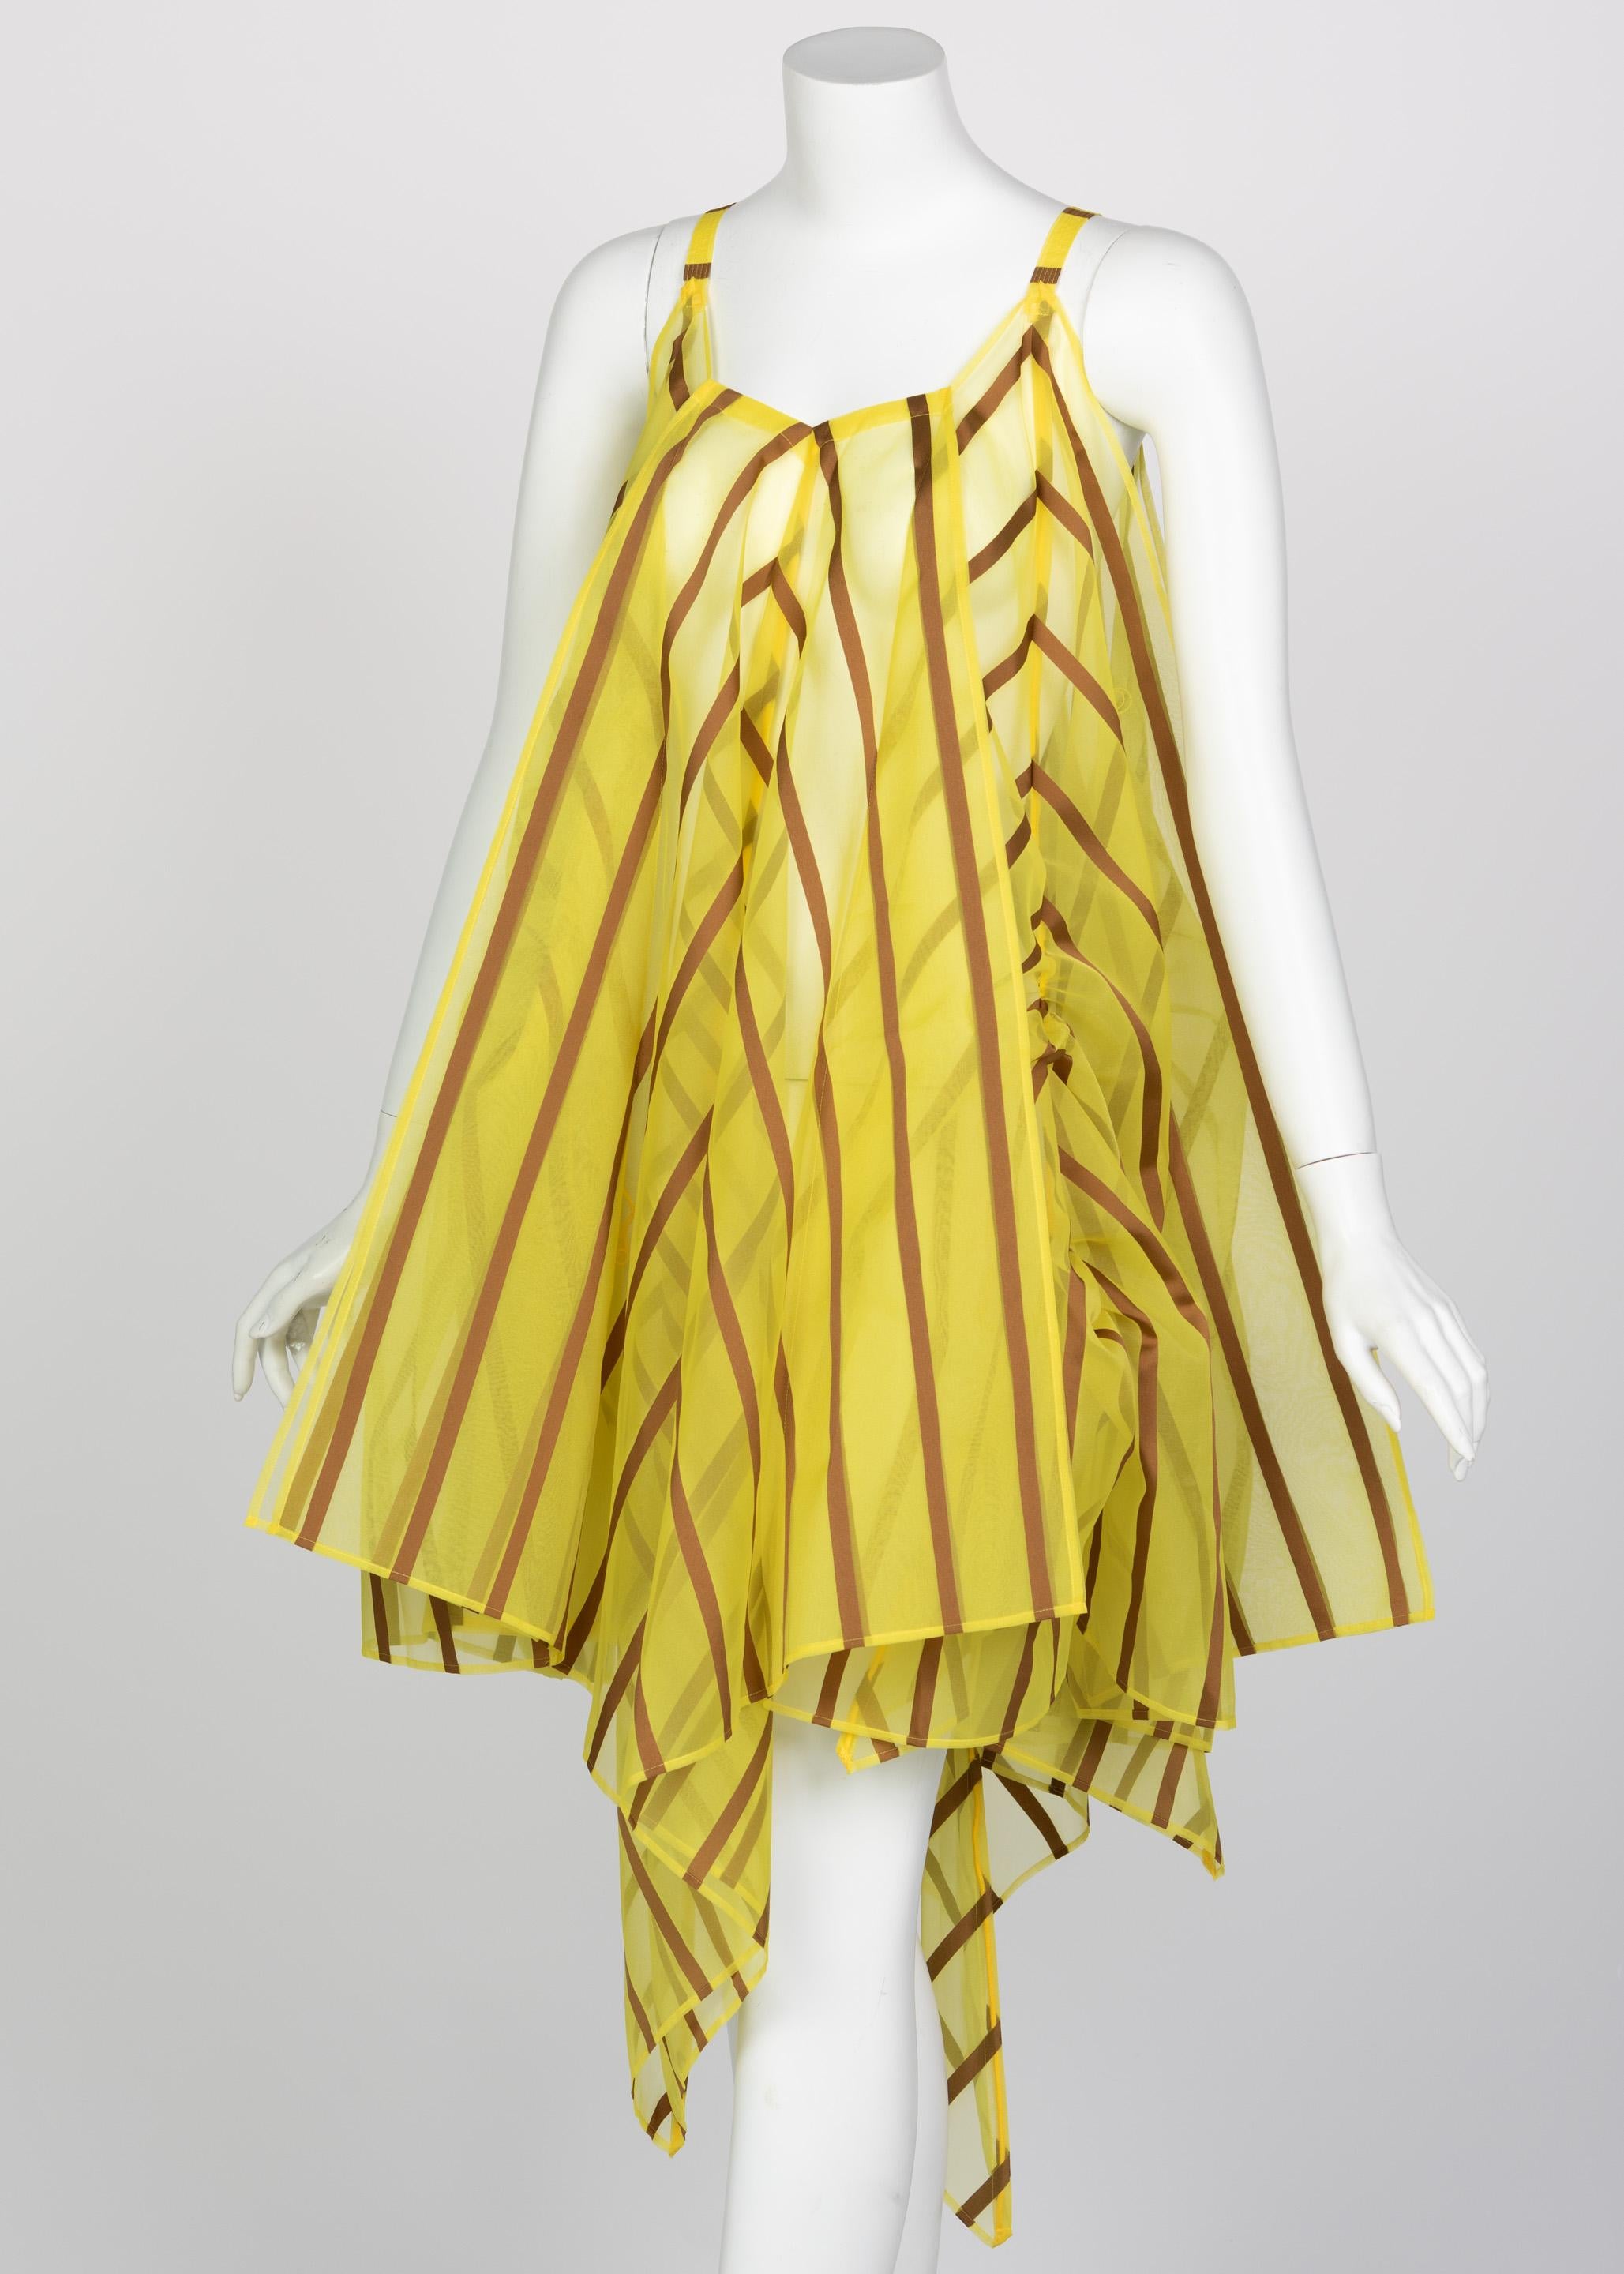 Issey Miyake Yellow Organza Brown Striped Handkerchief Dress 1